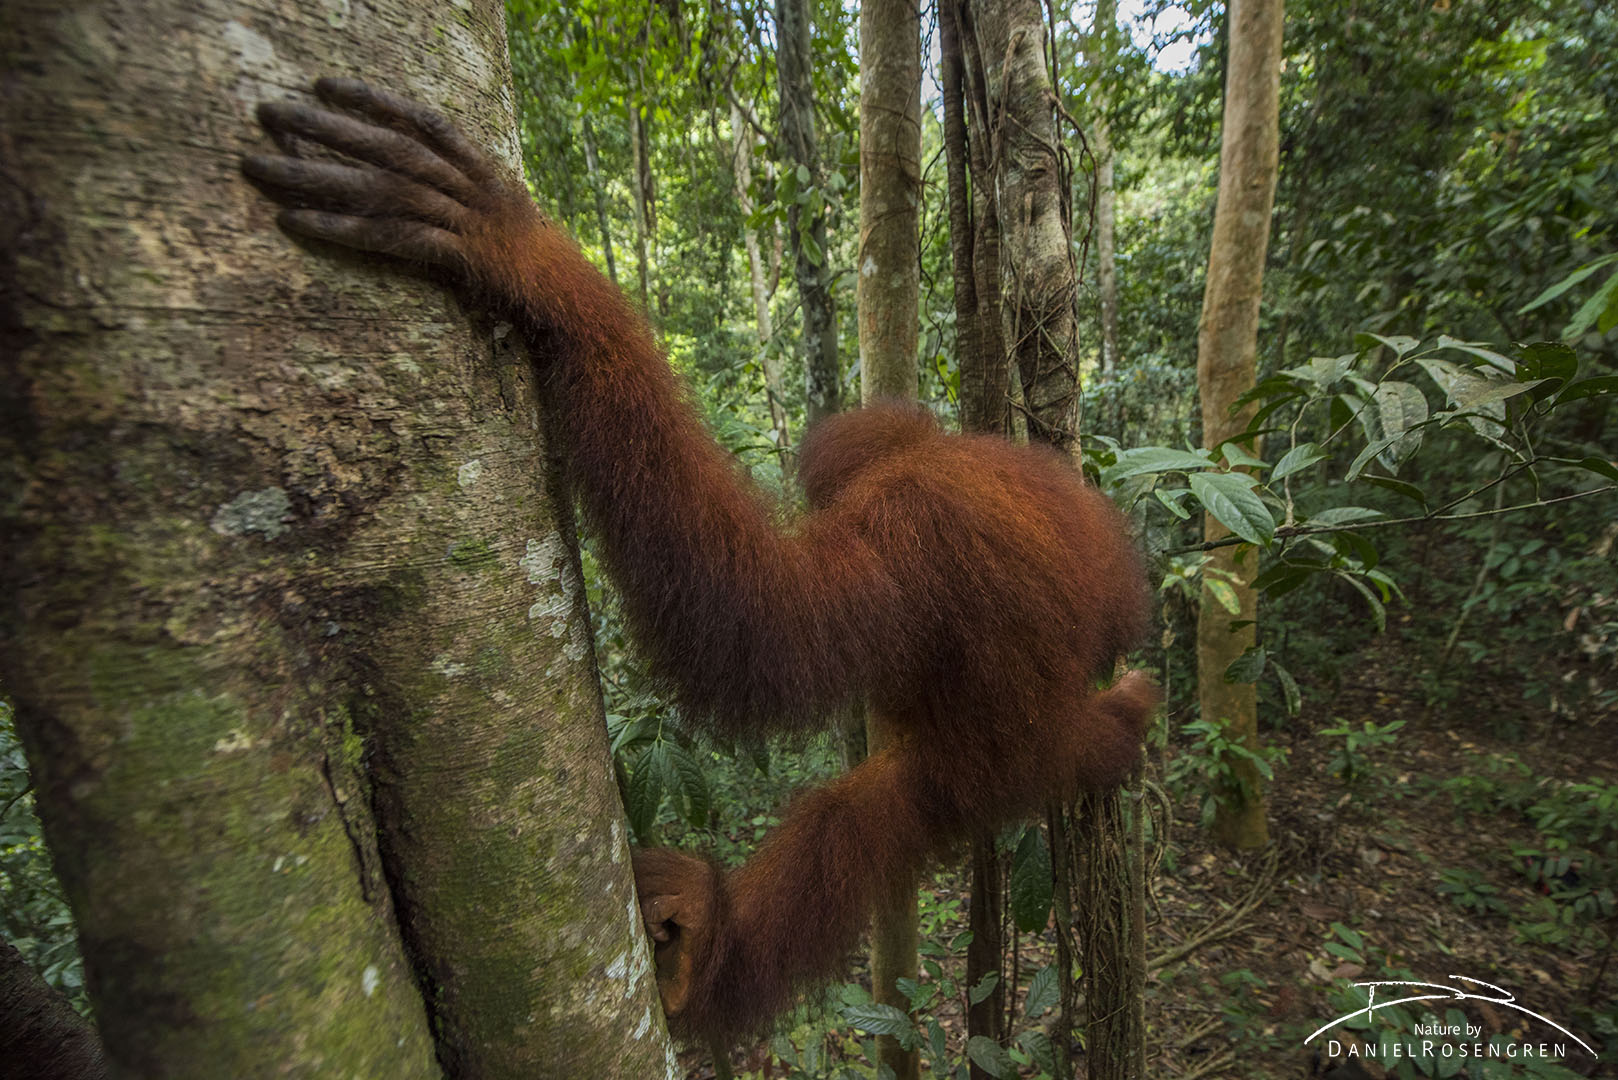 A Sumatran Orang-utan climbing in the forests of Bukit Tigapuluh. © Daniel Rosengren